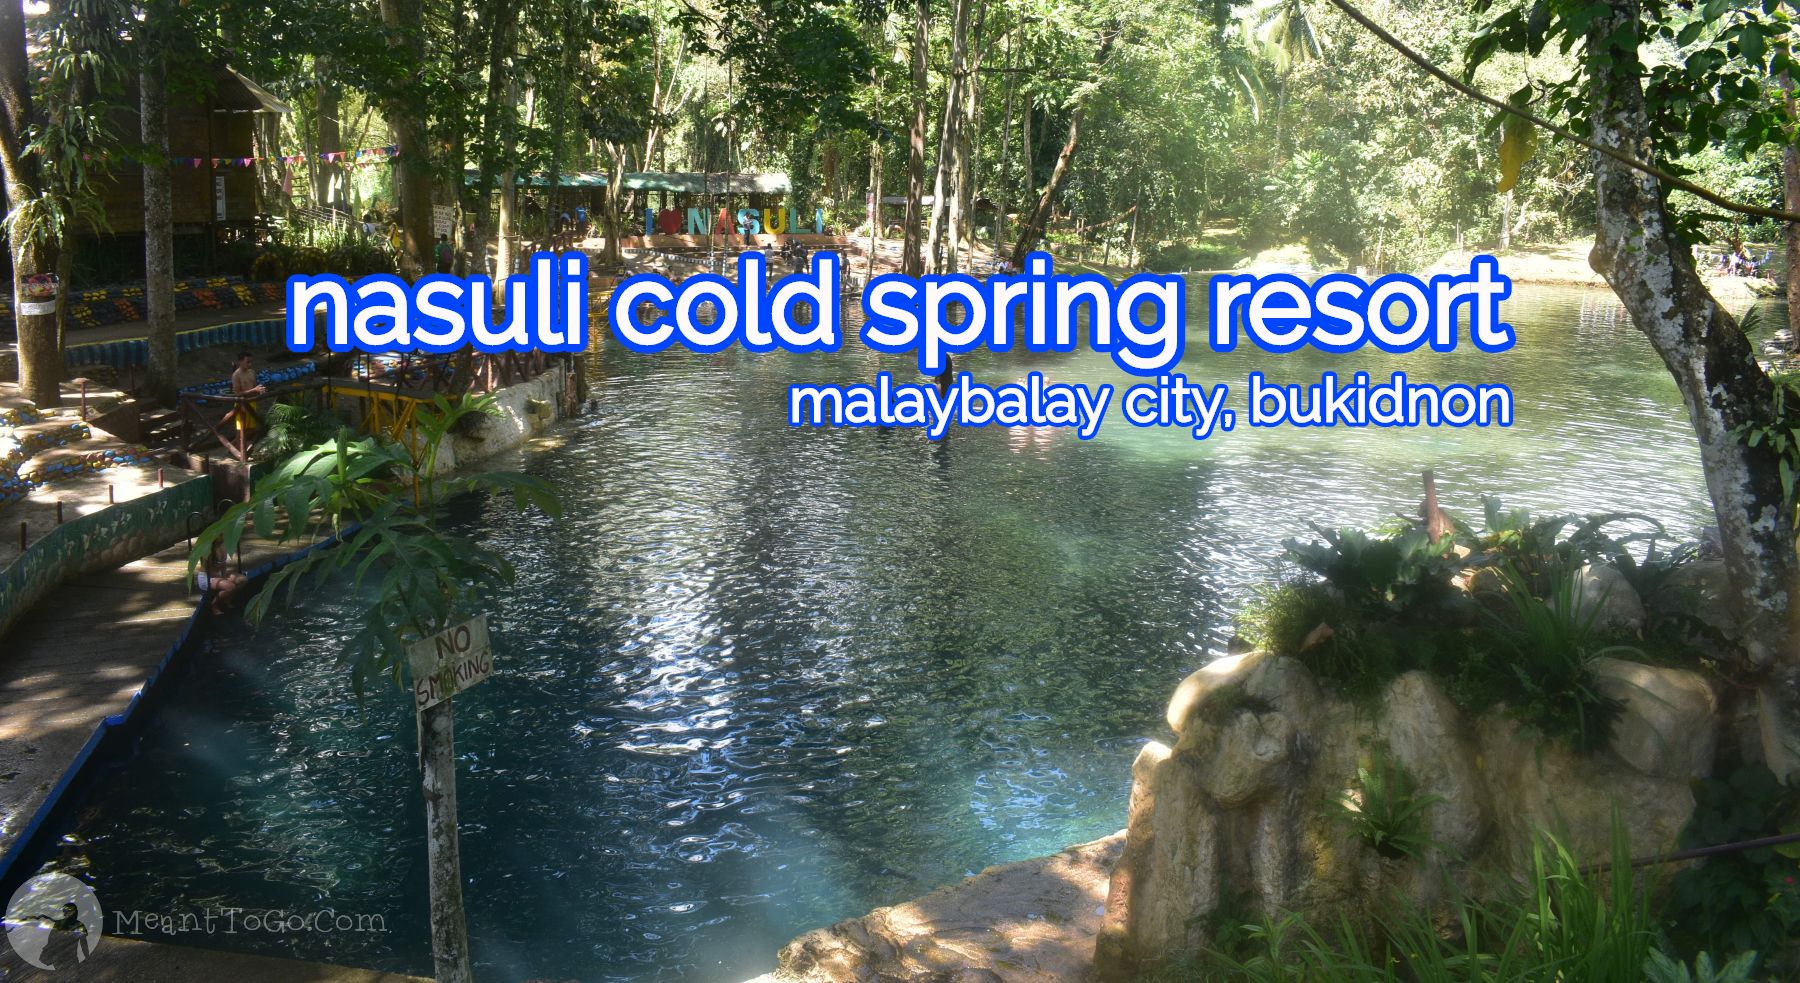 Nasuli Cold Spring Resort in Malaybalay City, Bukidnon